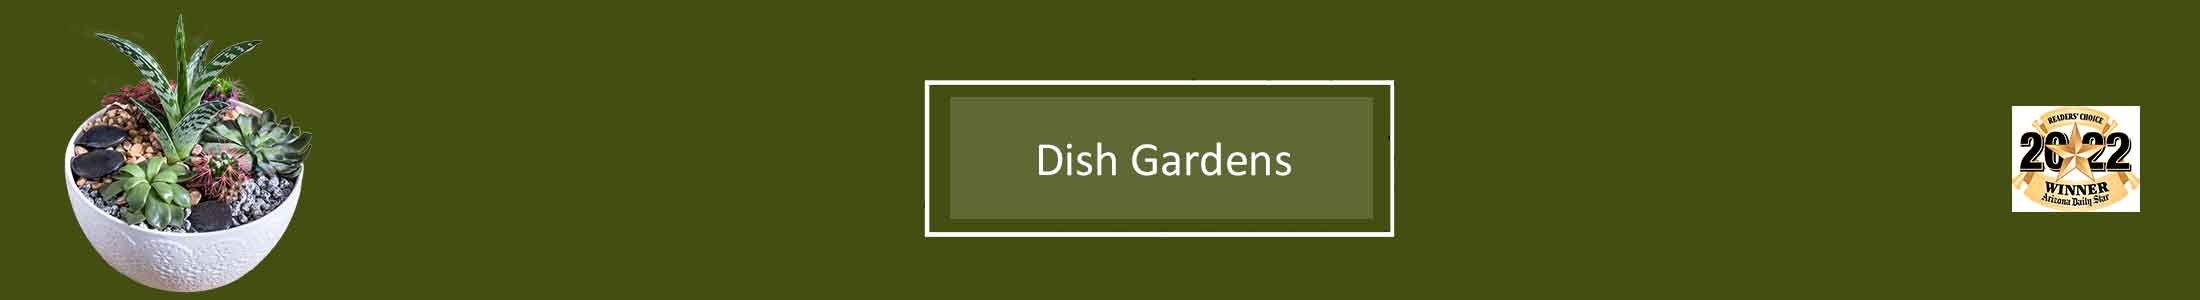 Dish Gardens, European Dish Gardens